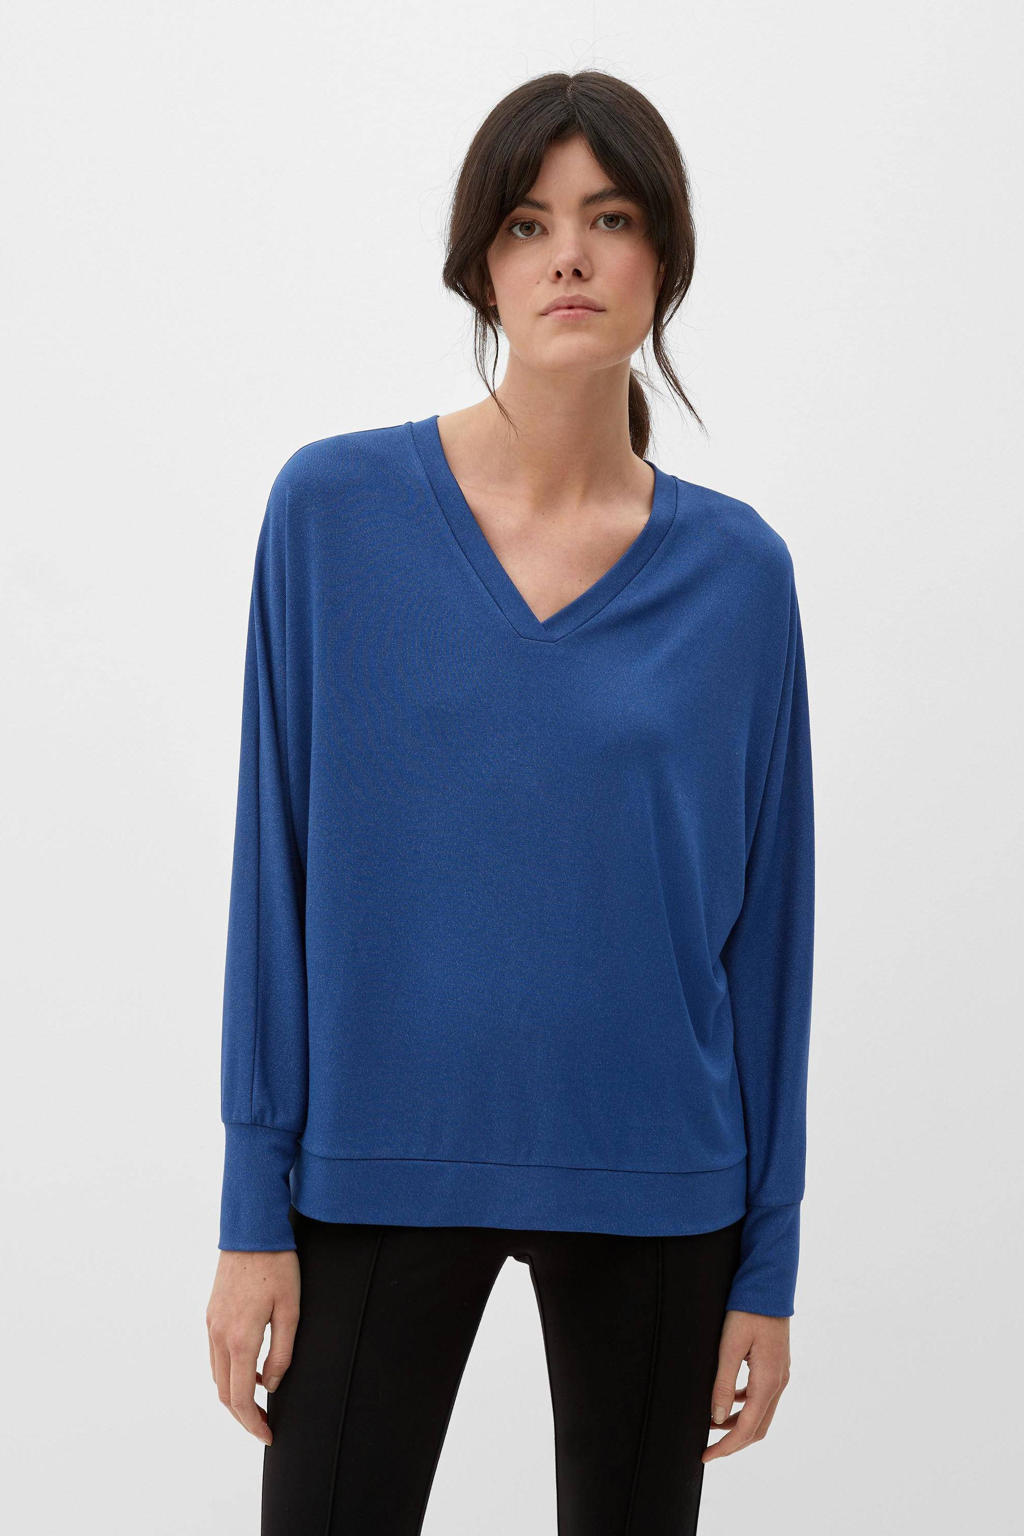 s.Oliver sweater blauw